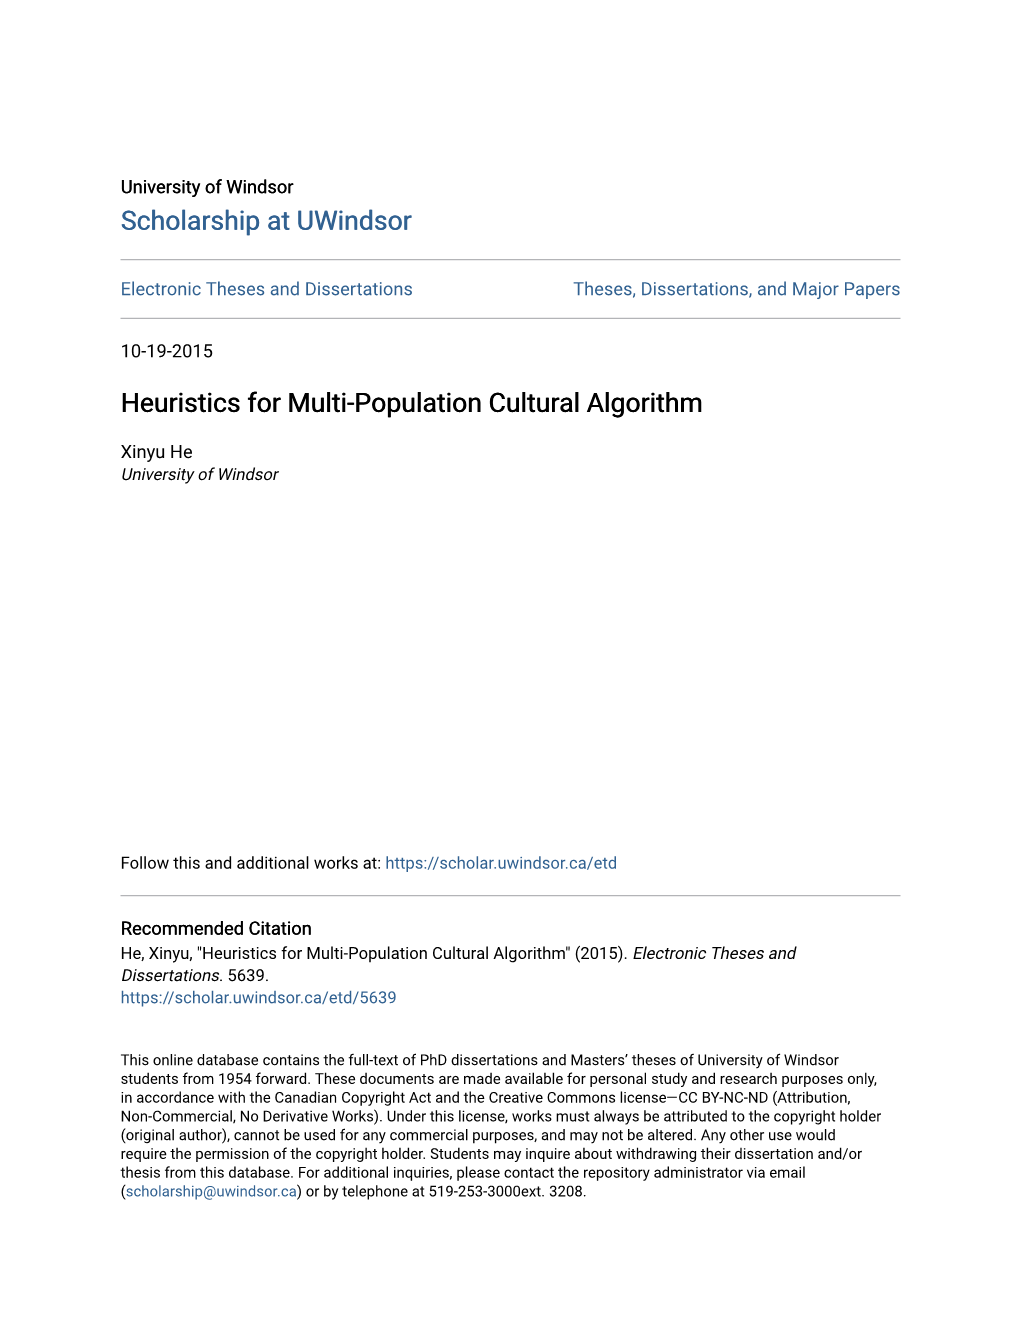 Heuristics for Multi-Population Cultural Algorithm